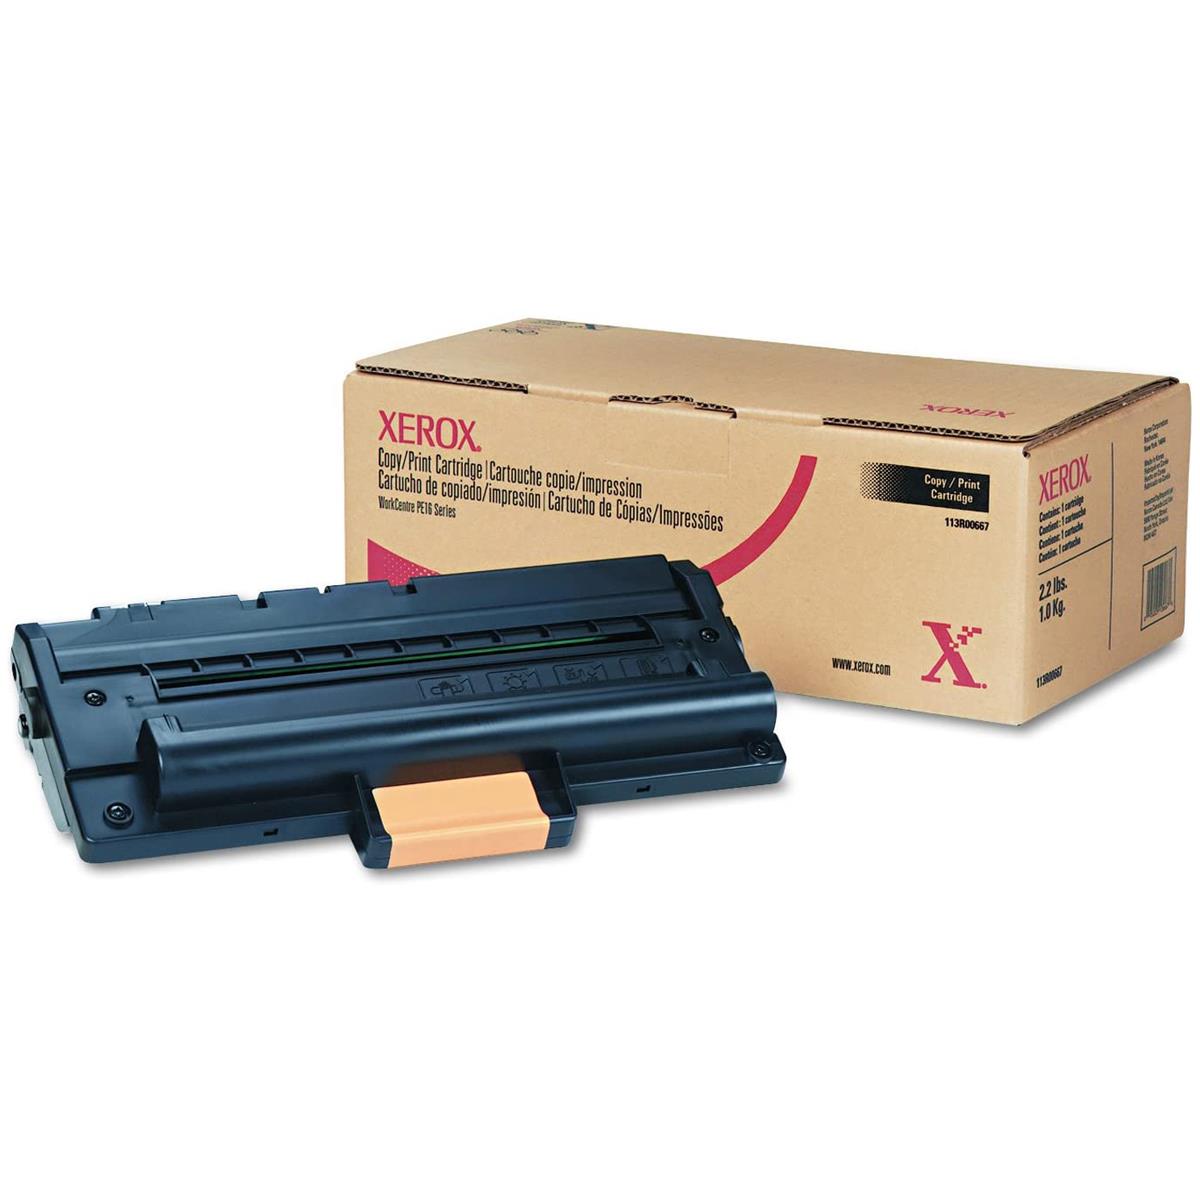 Image of Xerox Black Laser Toner and Drum Cartridge for WorkCentre PE16 Printer